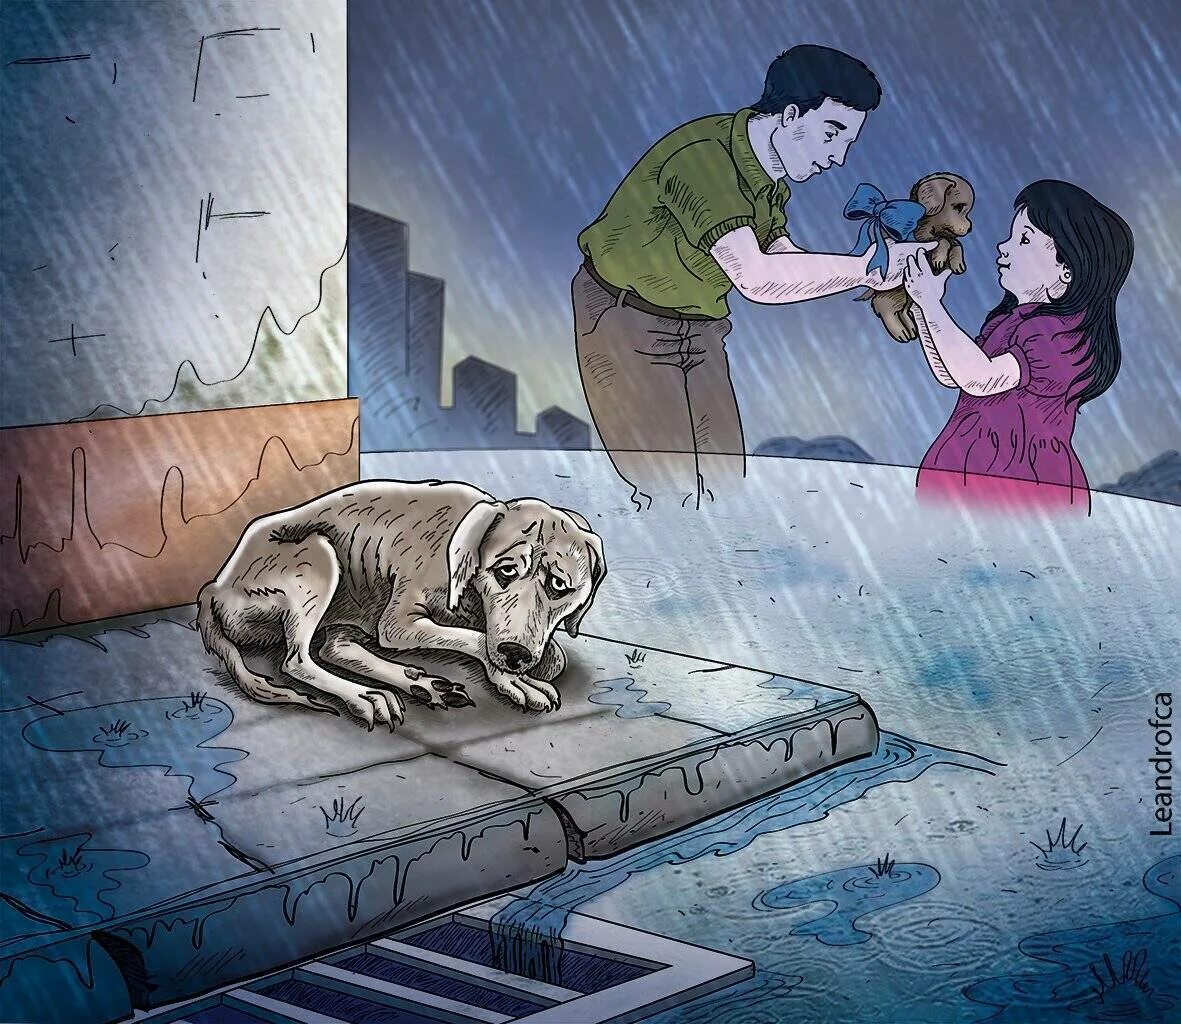 Рисунок на тему бездомные животные. Бездомные животные и человек. Про брошенных животных. Бездомное животное и человек.